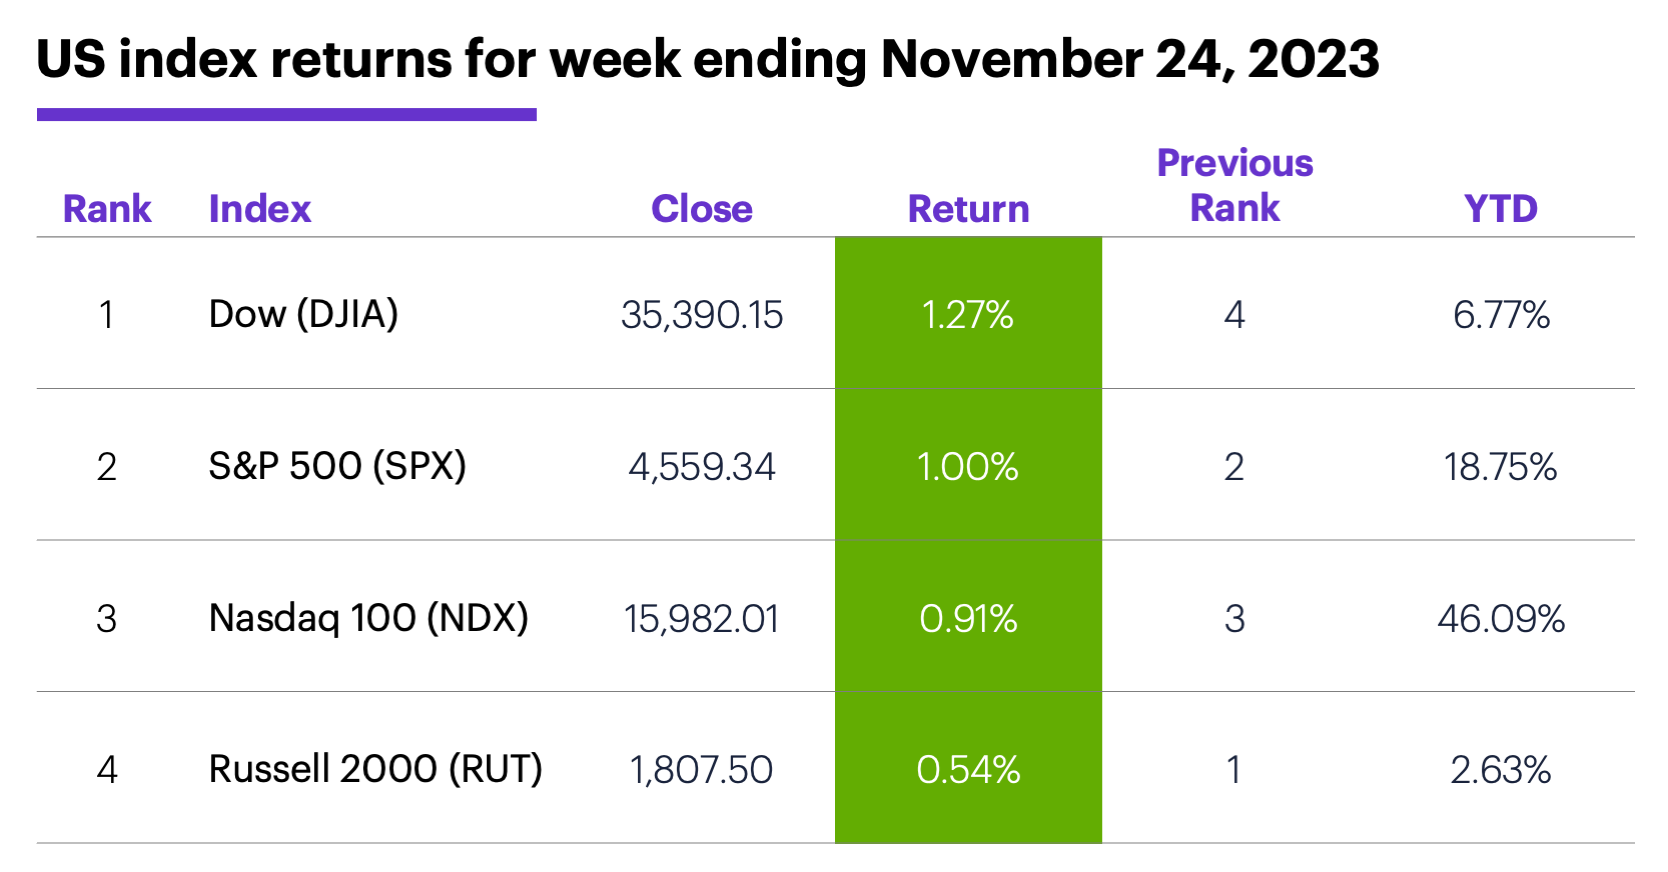 US stock index performance for week ending 11/24/23. S&P 500 (SPX), Nasdaq 100 (NDX), Russell 2000 (RUT), Dow Jones Industrial Average (DJIA).